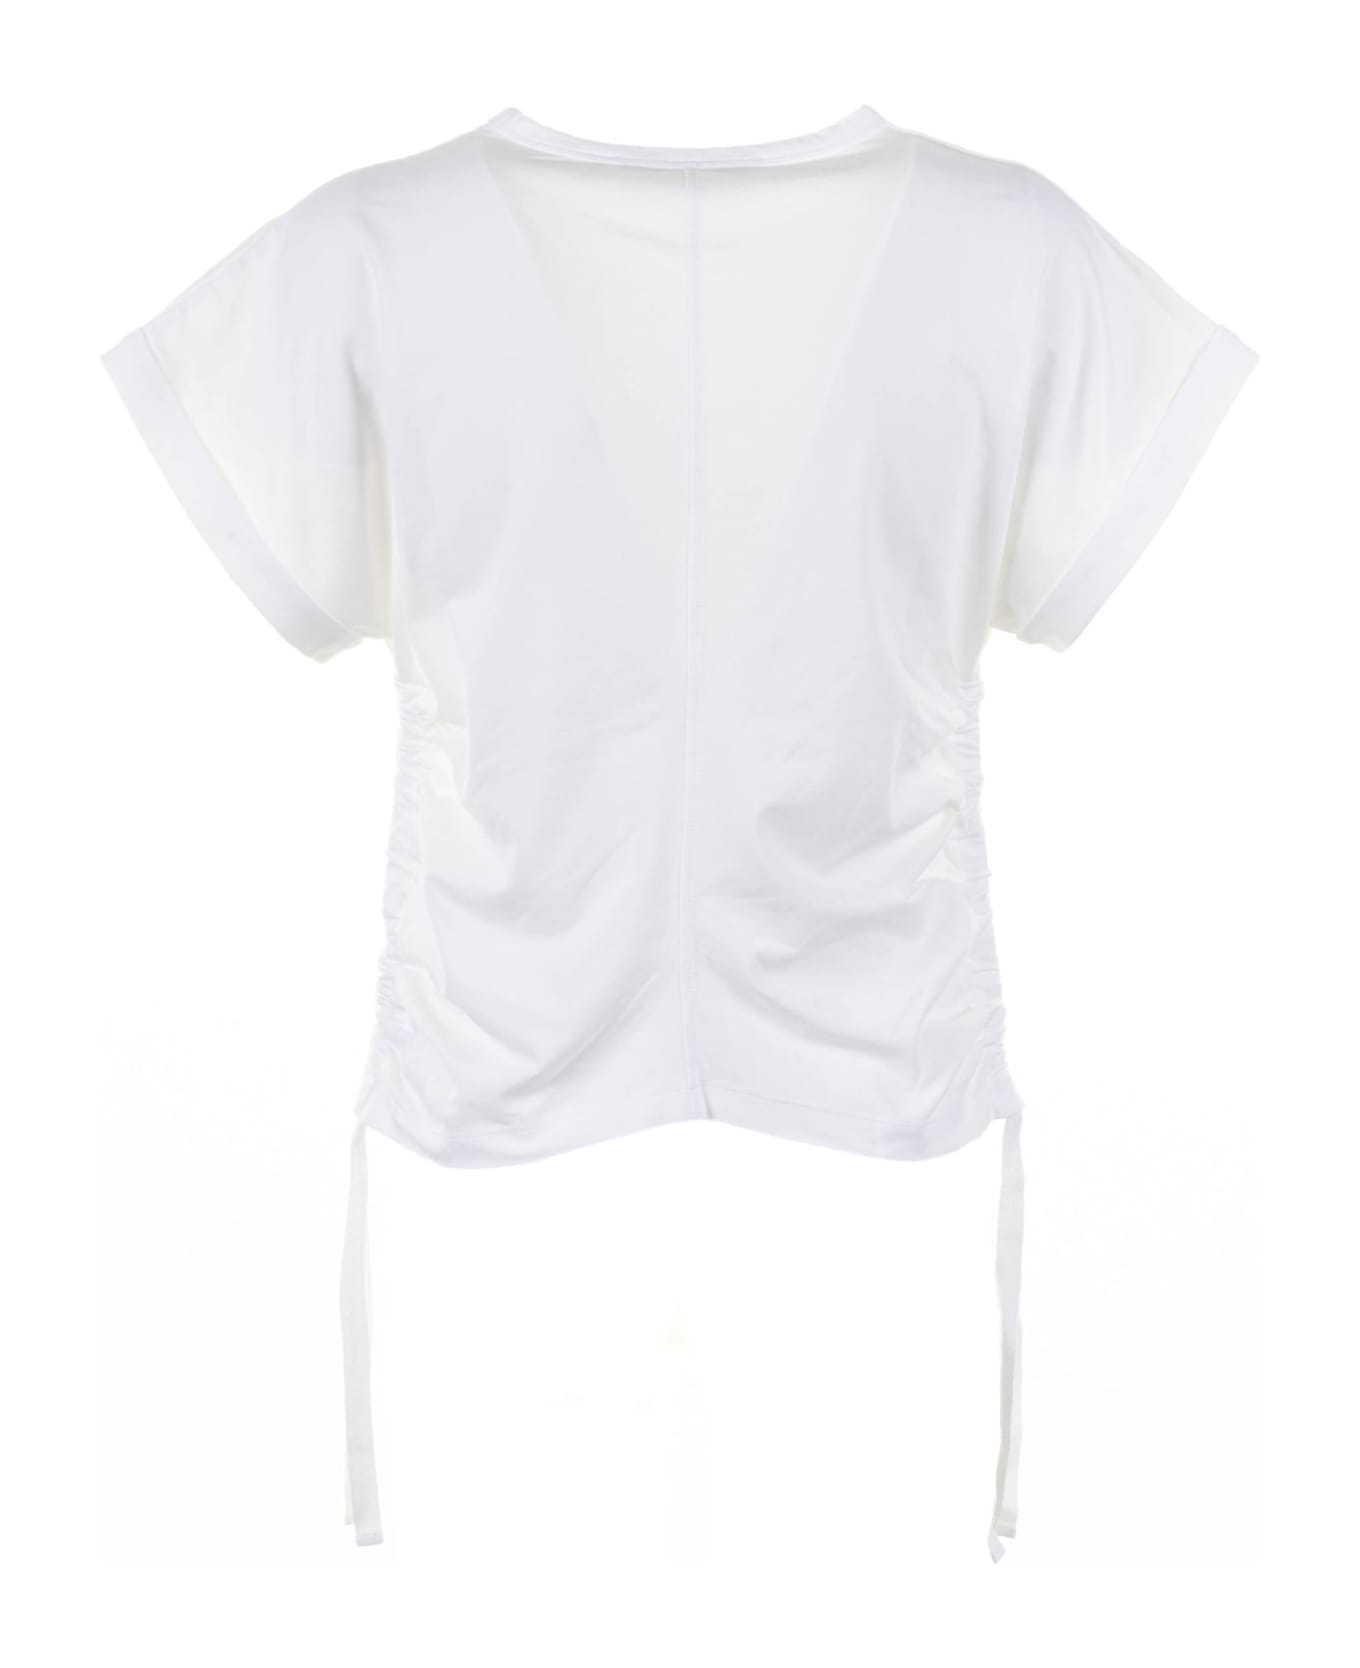 19.70 Nineteen Seventy T-shirt Whit Adjustable Side Gathering - BIANCO Tシャツ